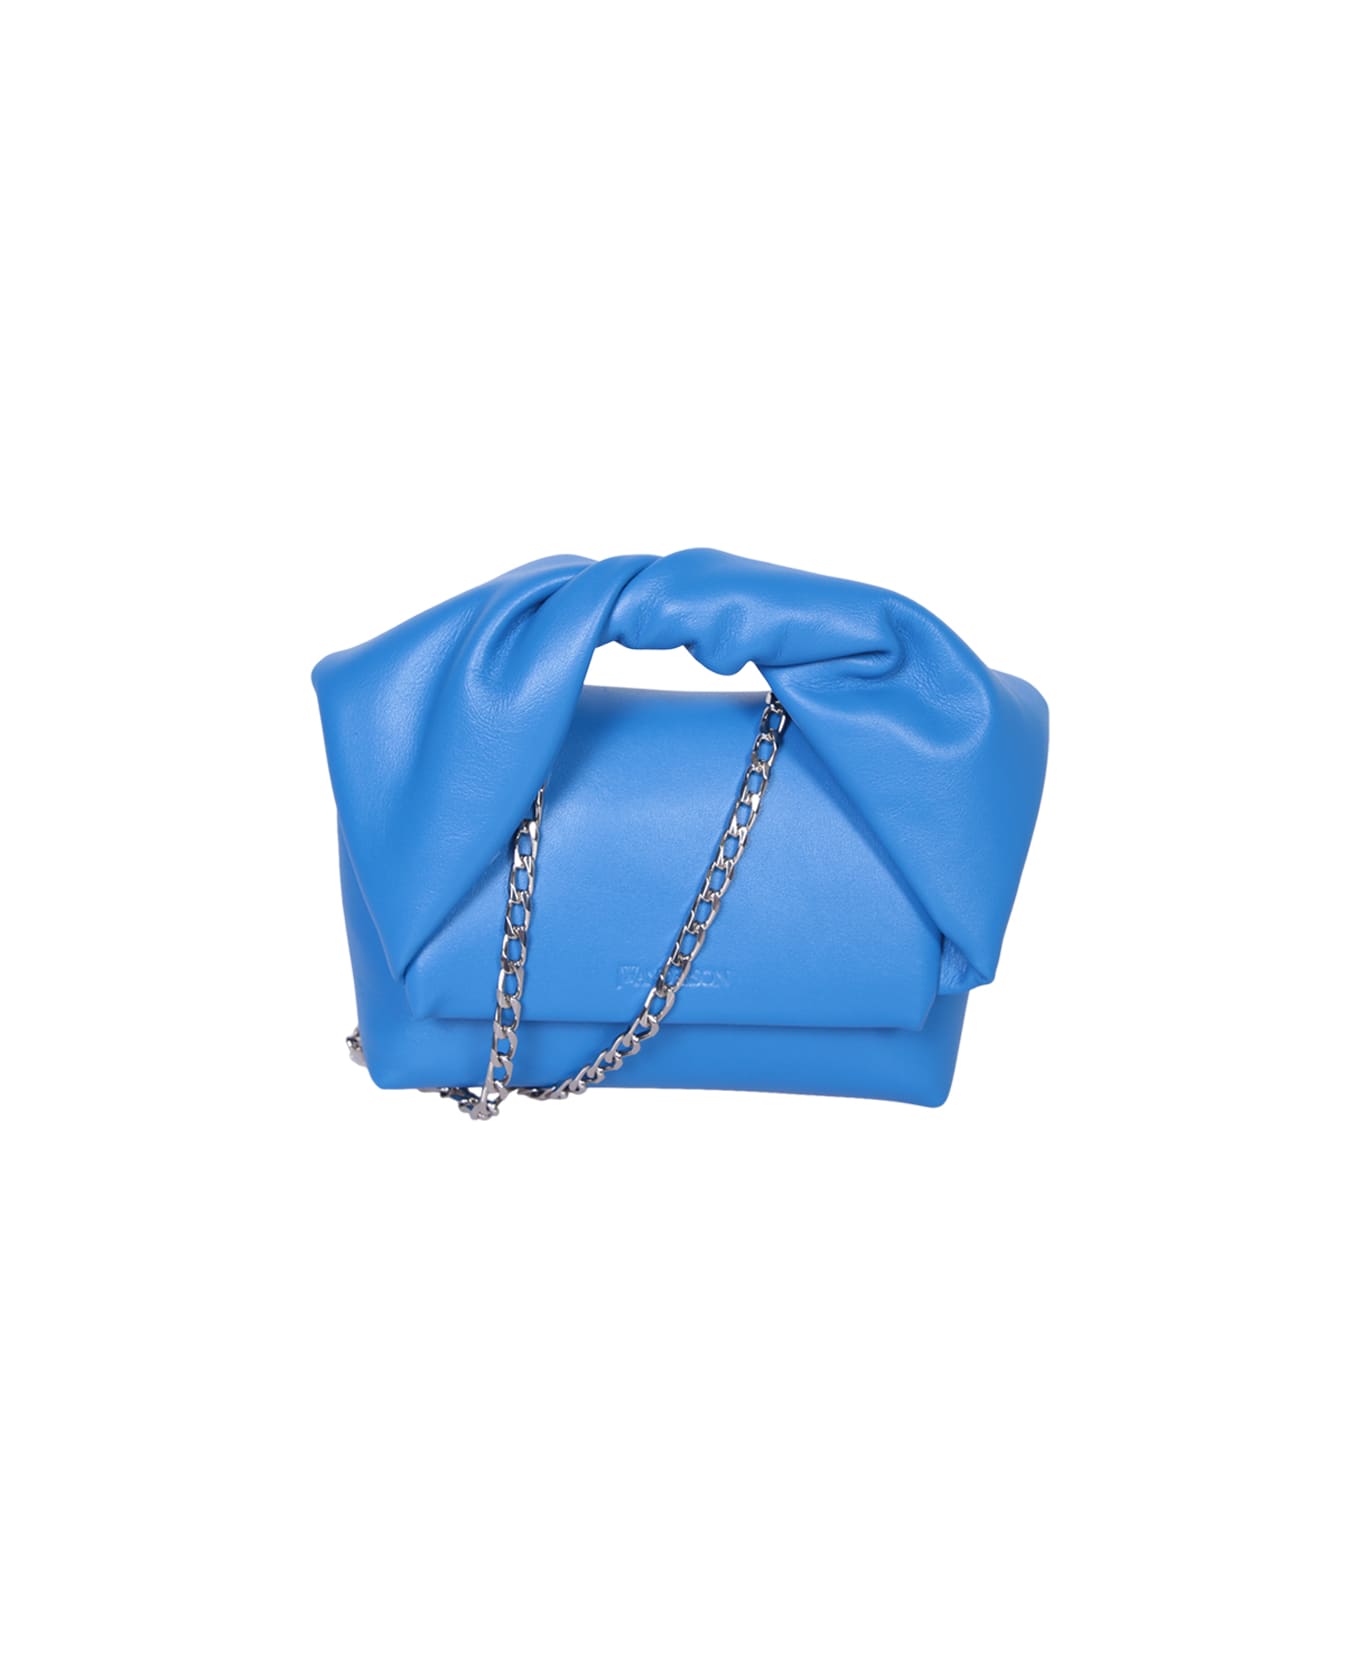 J.W. Anderson Twister Small Light Blue Bag - Blue